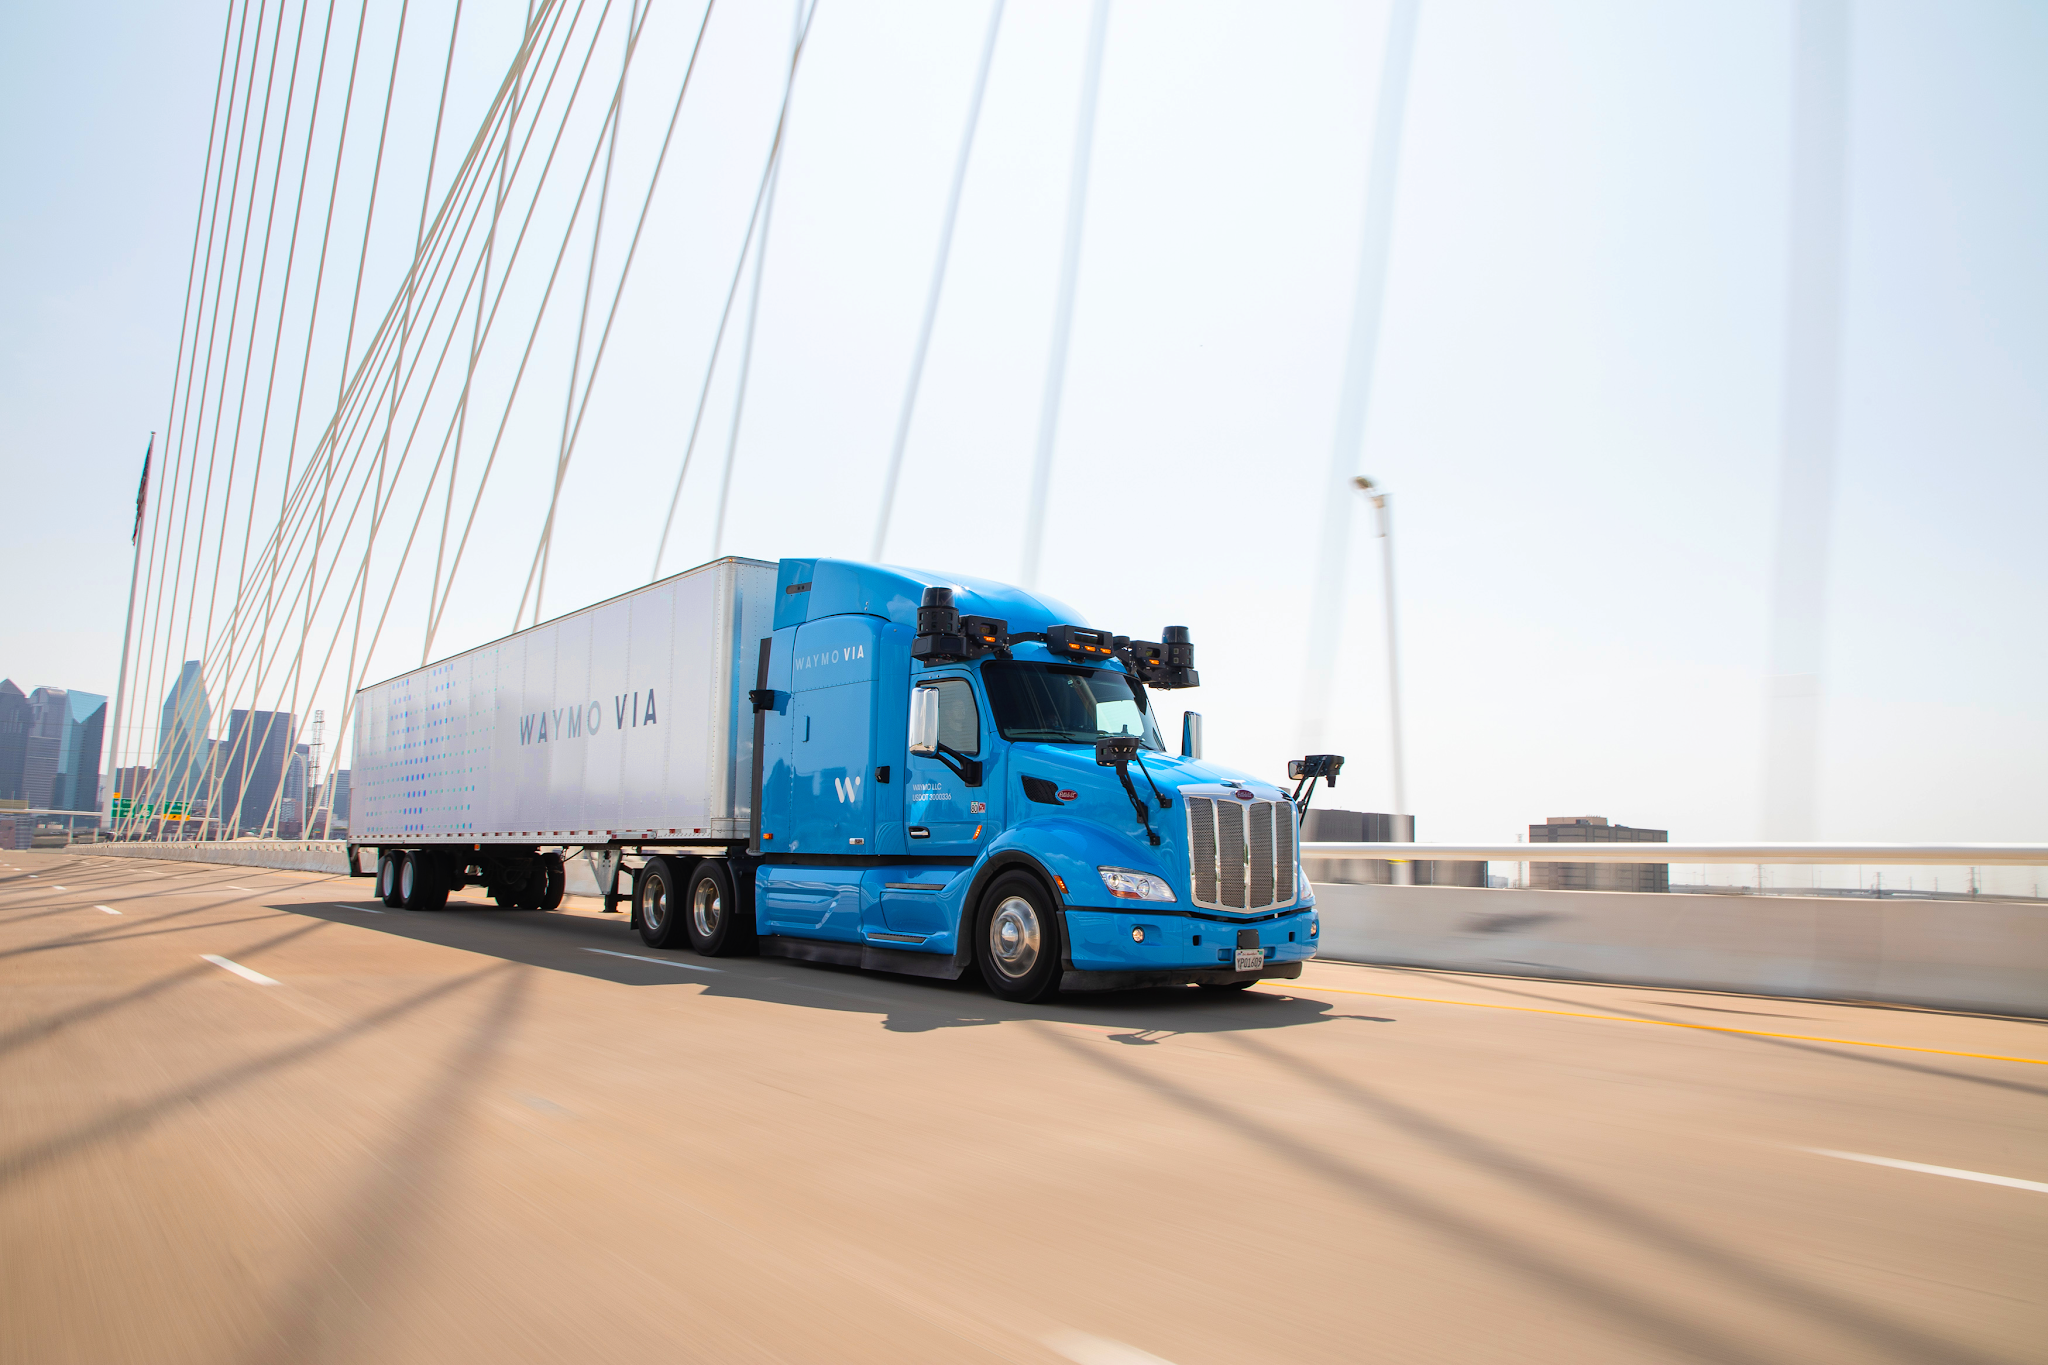 Waymo Via Expands UPS Partnership to Autonomous Freight Movement